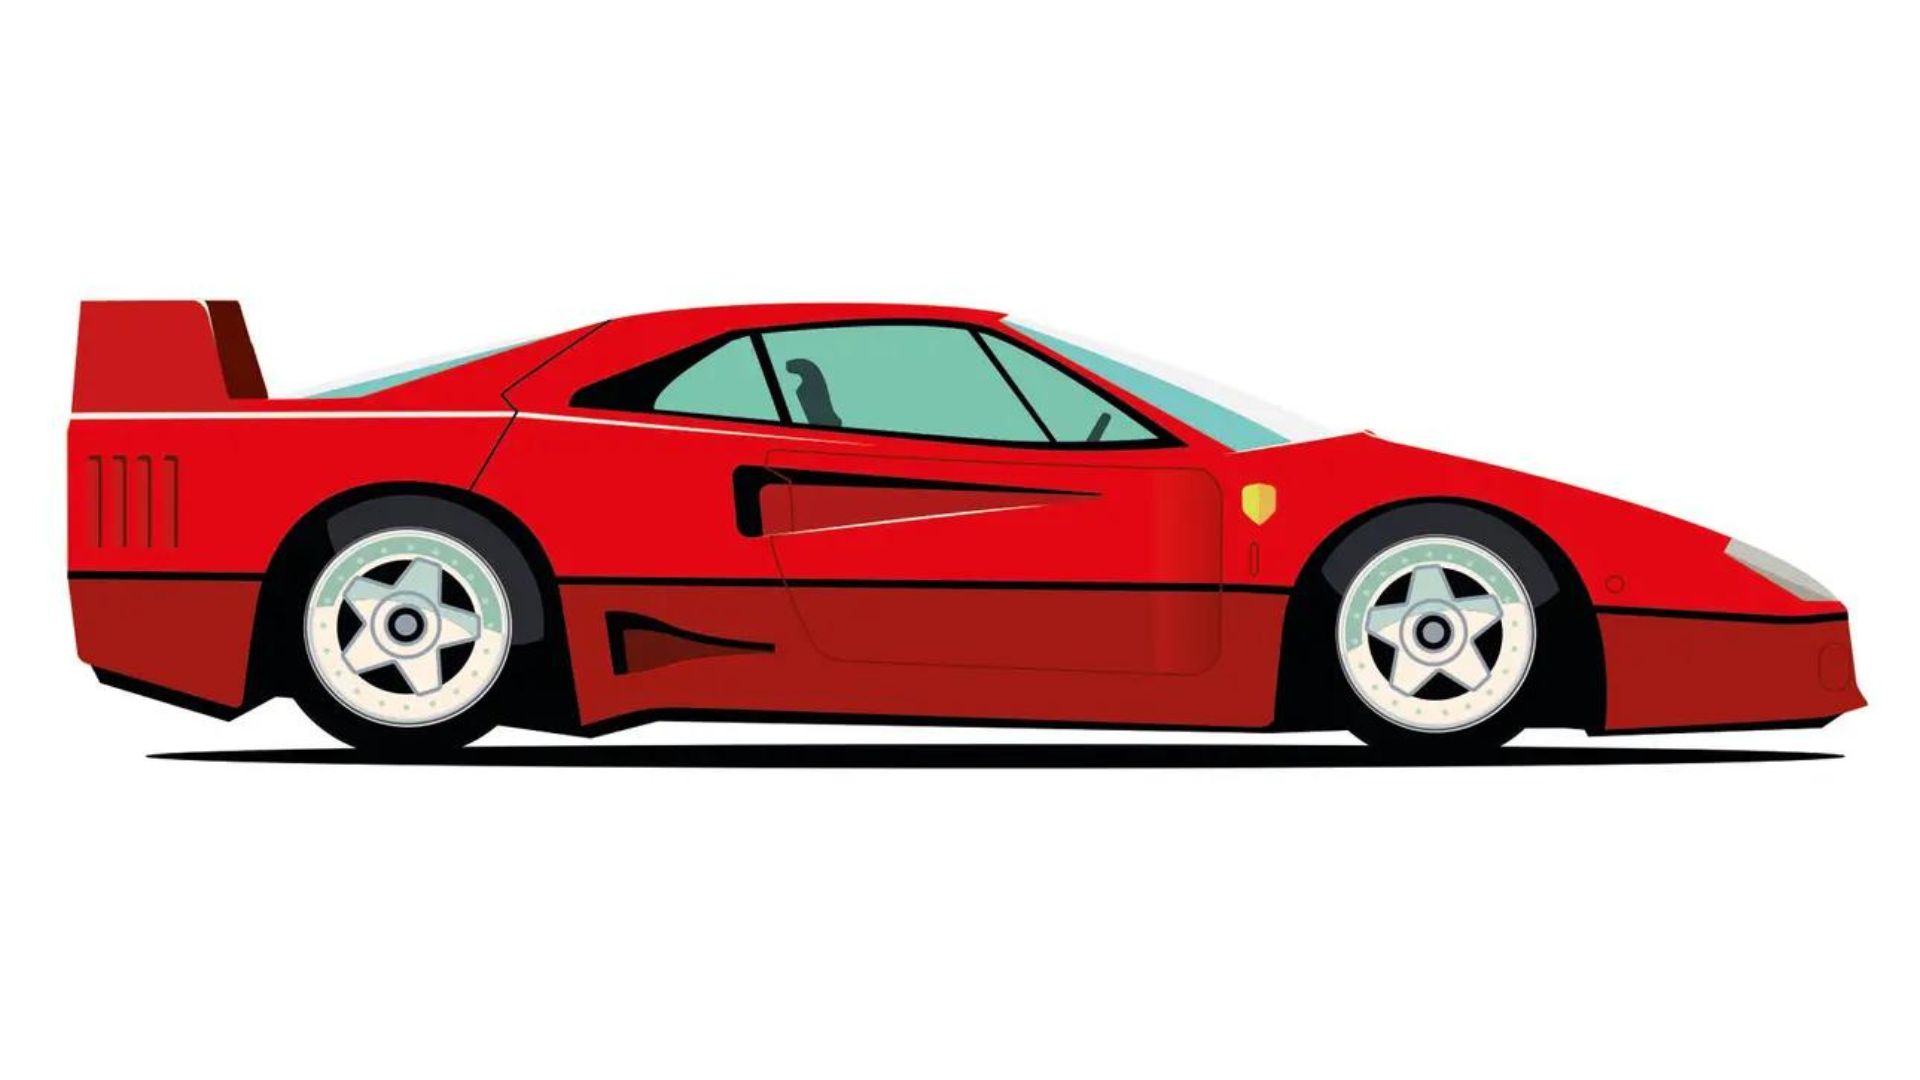 Greatest Ferrari road cars of all time: F40